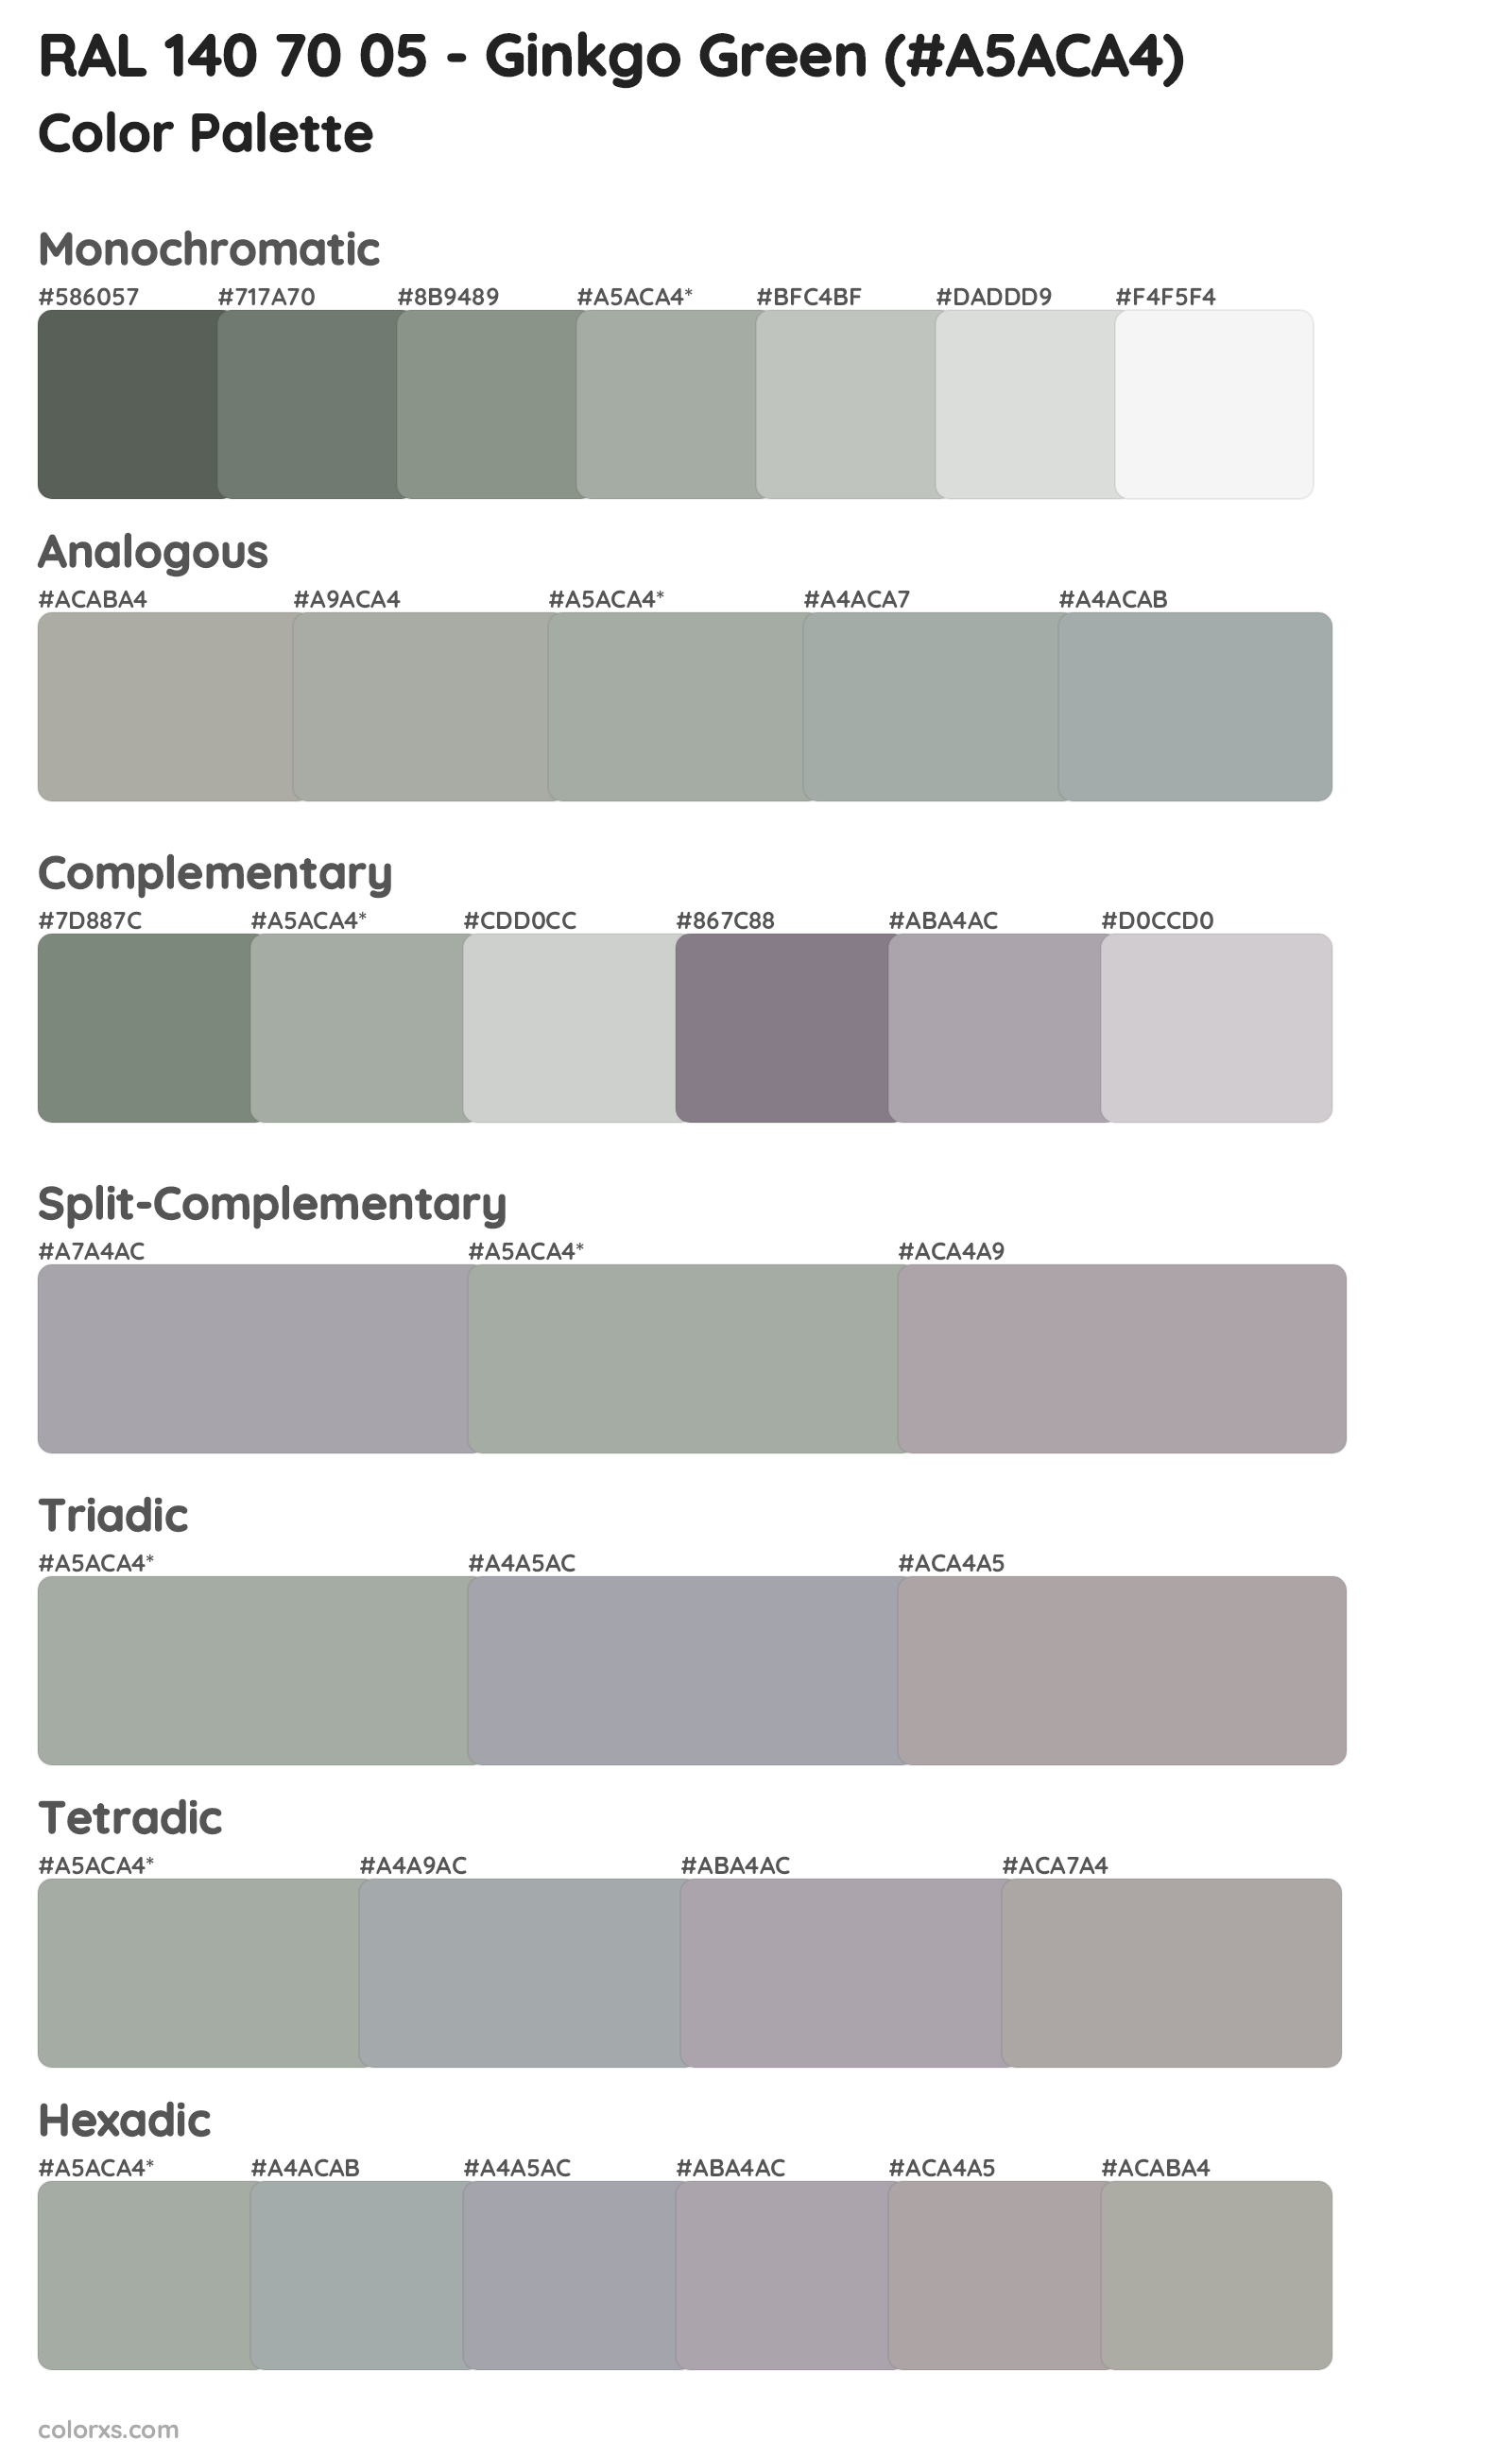 RAL 140 70 05 - Ginkgo Green Color Scheme Palettes